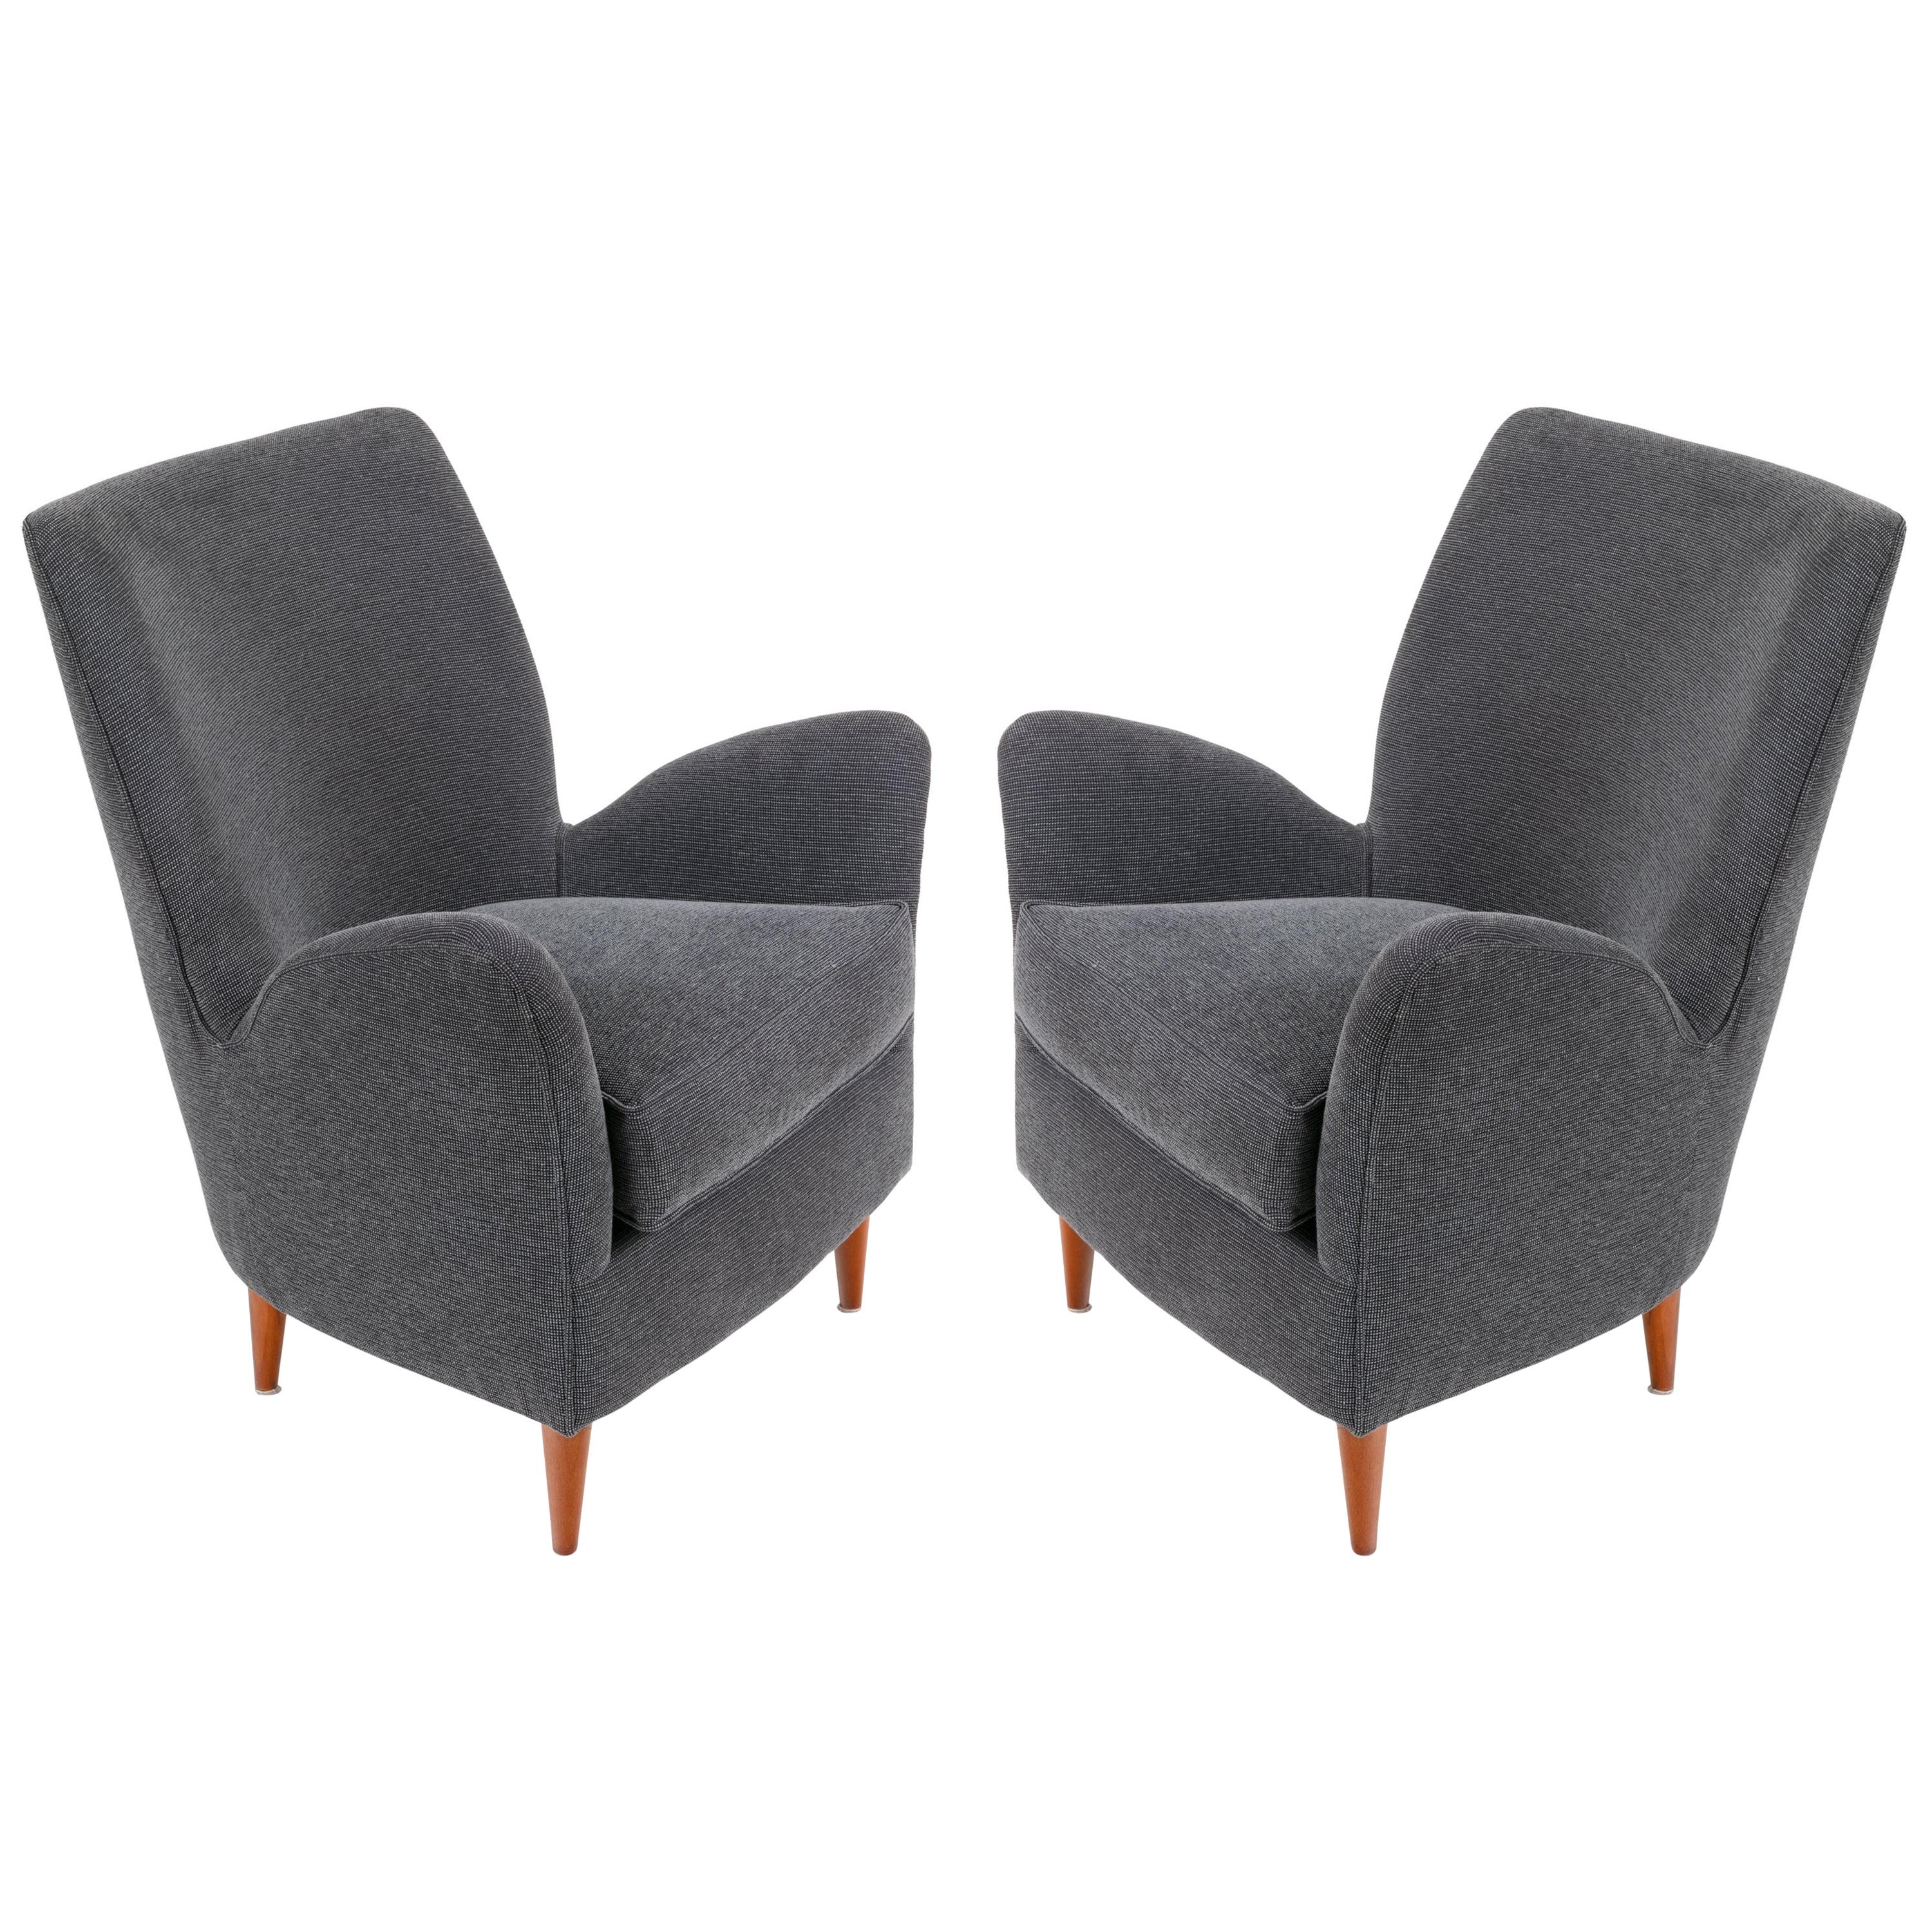 Pair of Gray Italian Midcentury Style Lounge Chairs